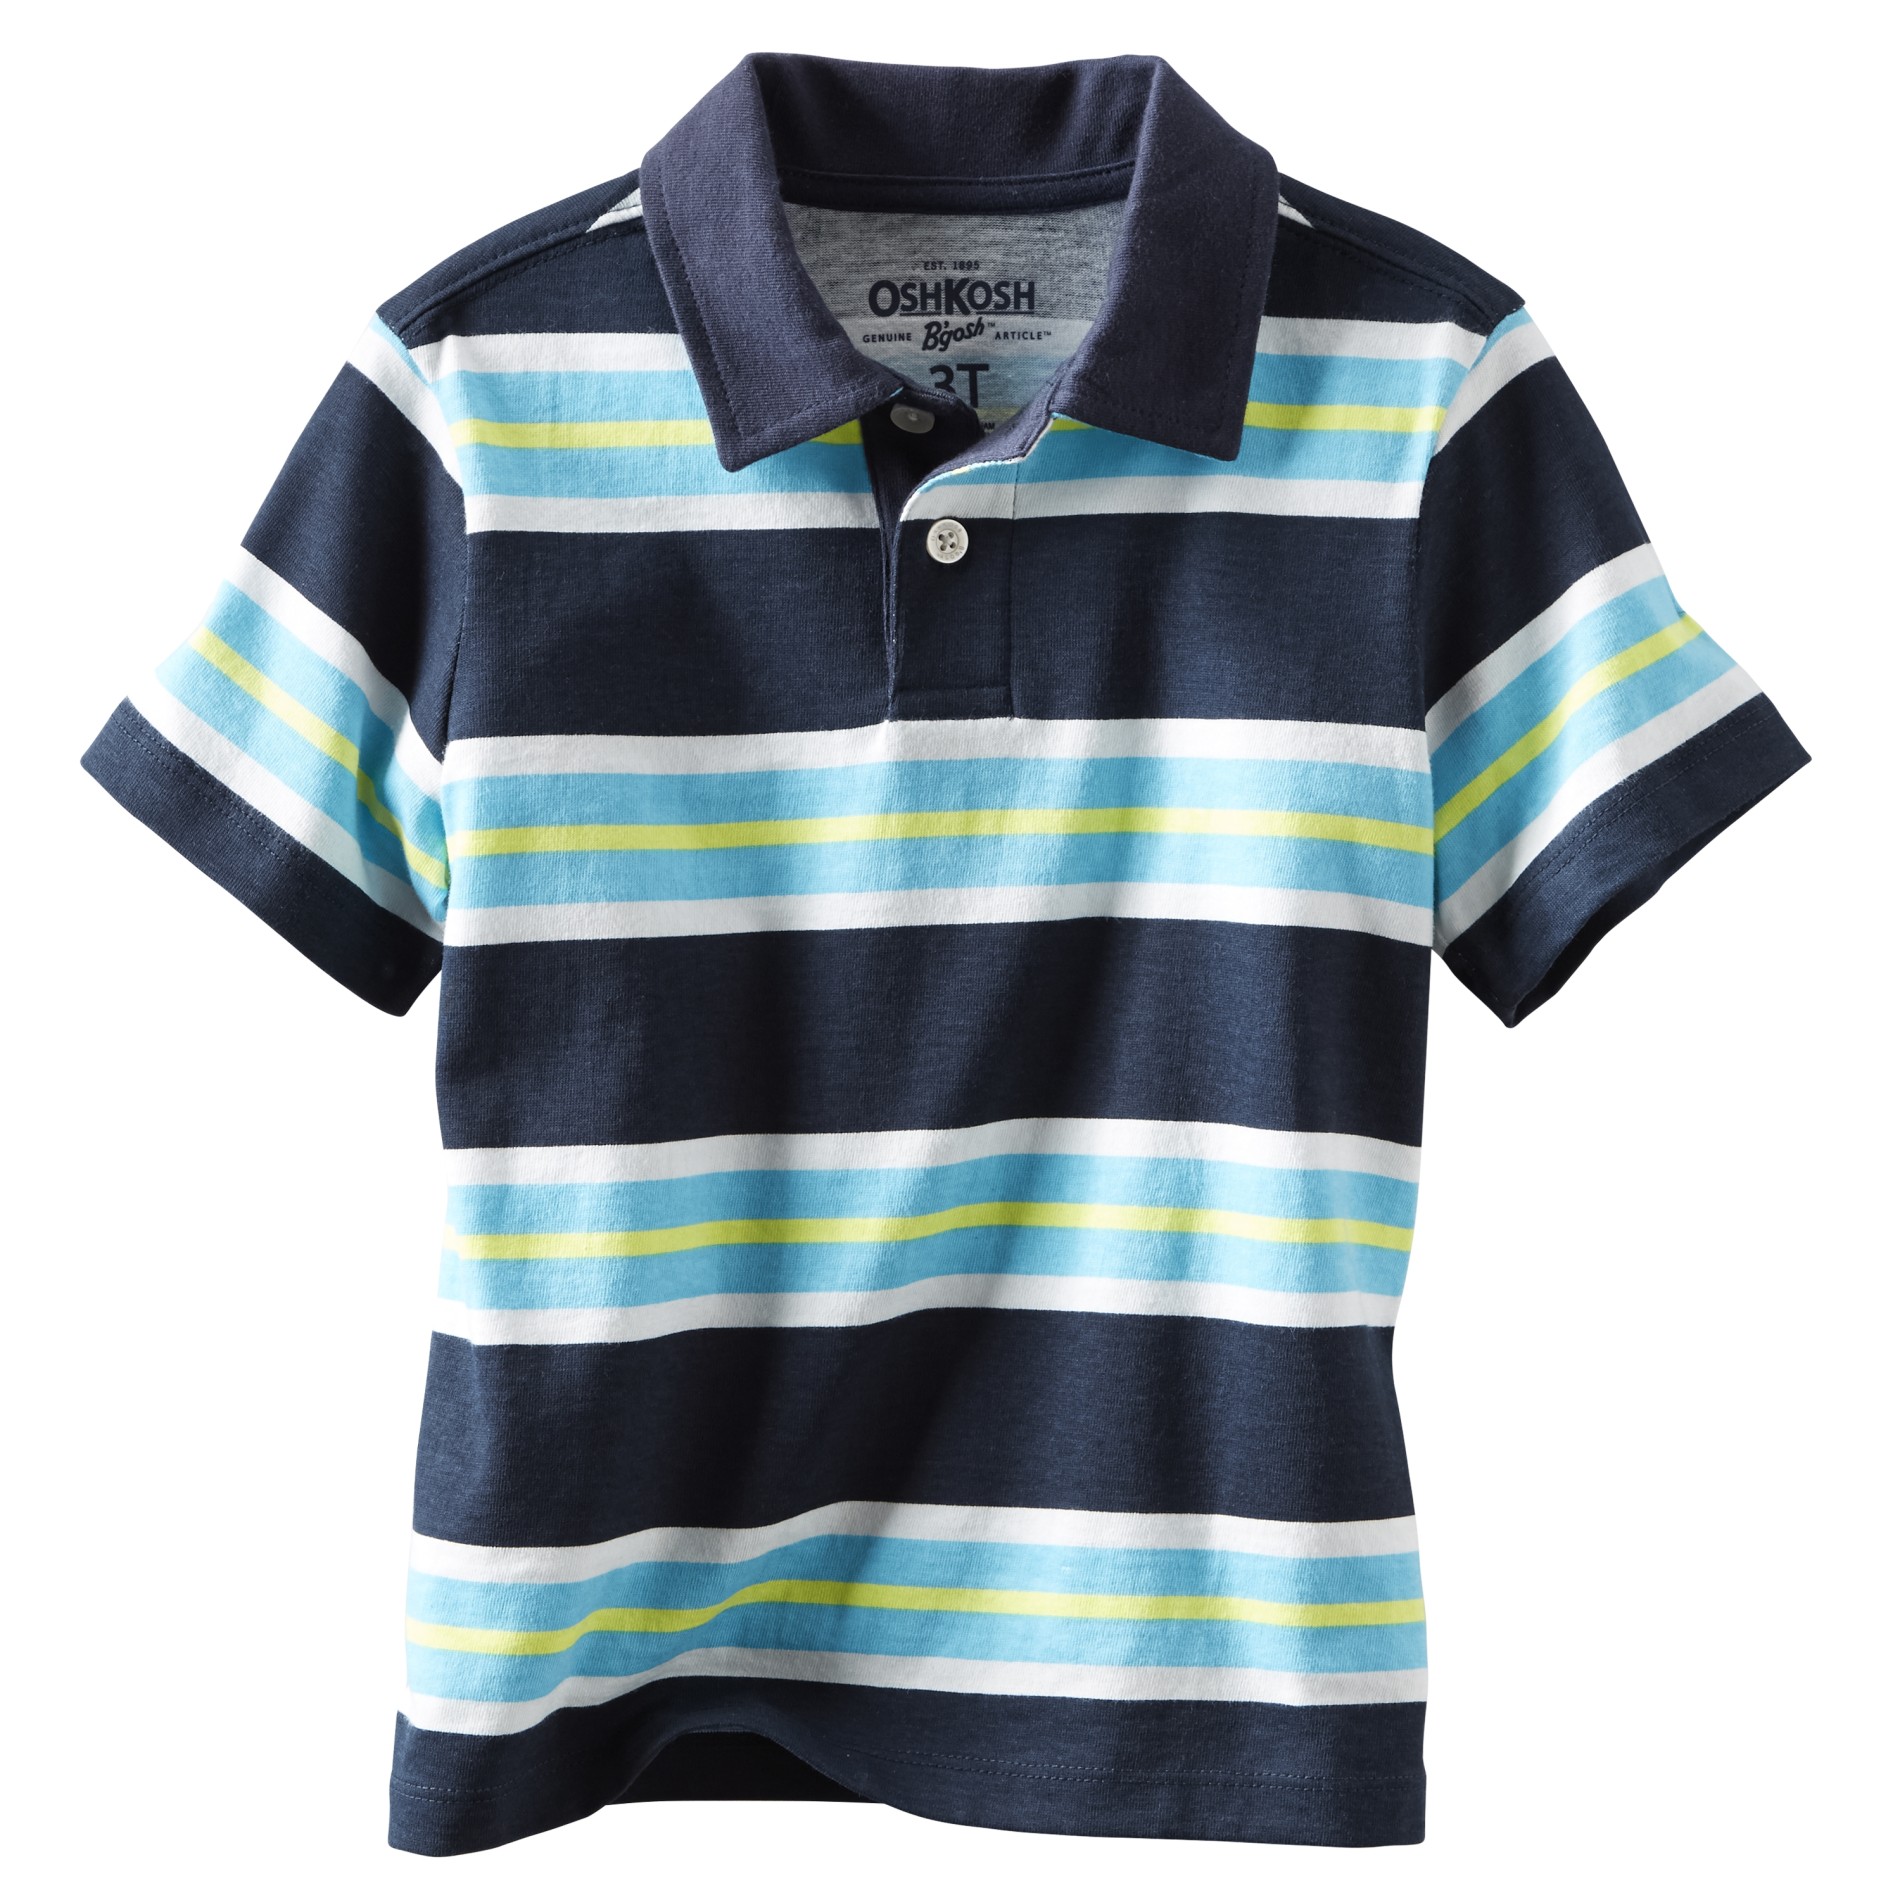 OshKosh Boy's Jersey Knit Polo Shirt - Striped